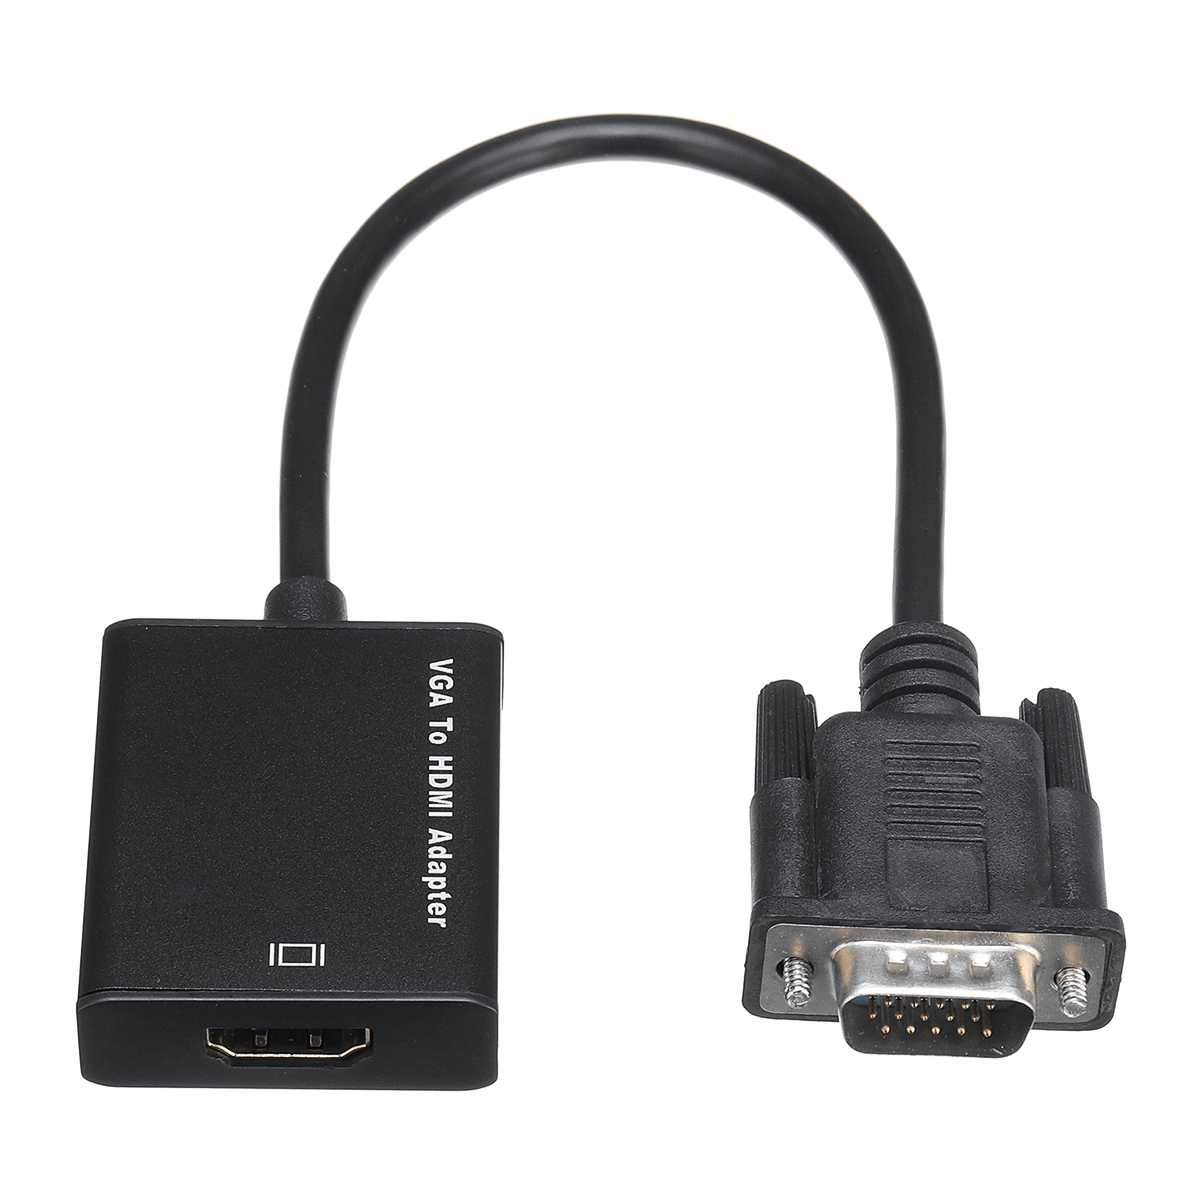 Переходник для hdmi кабеля. Переходник (адаптер) VGA-HDMI. Адаптер ВГА на HDMI. Переходник VGA-HDMI ot-avw21. Переходник ВГА В HDMI для монитора.